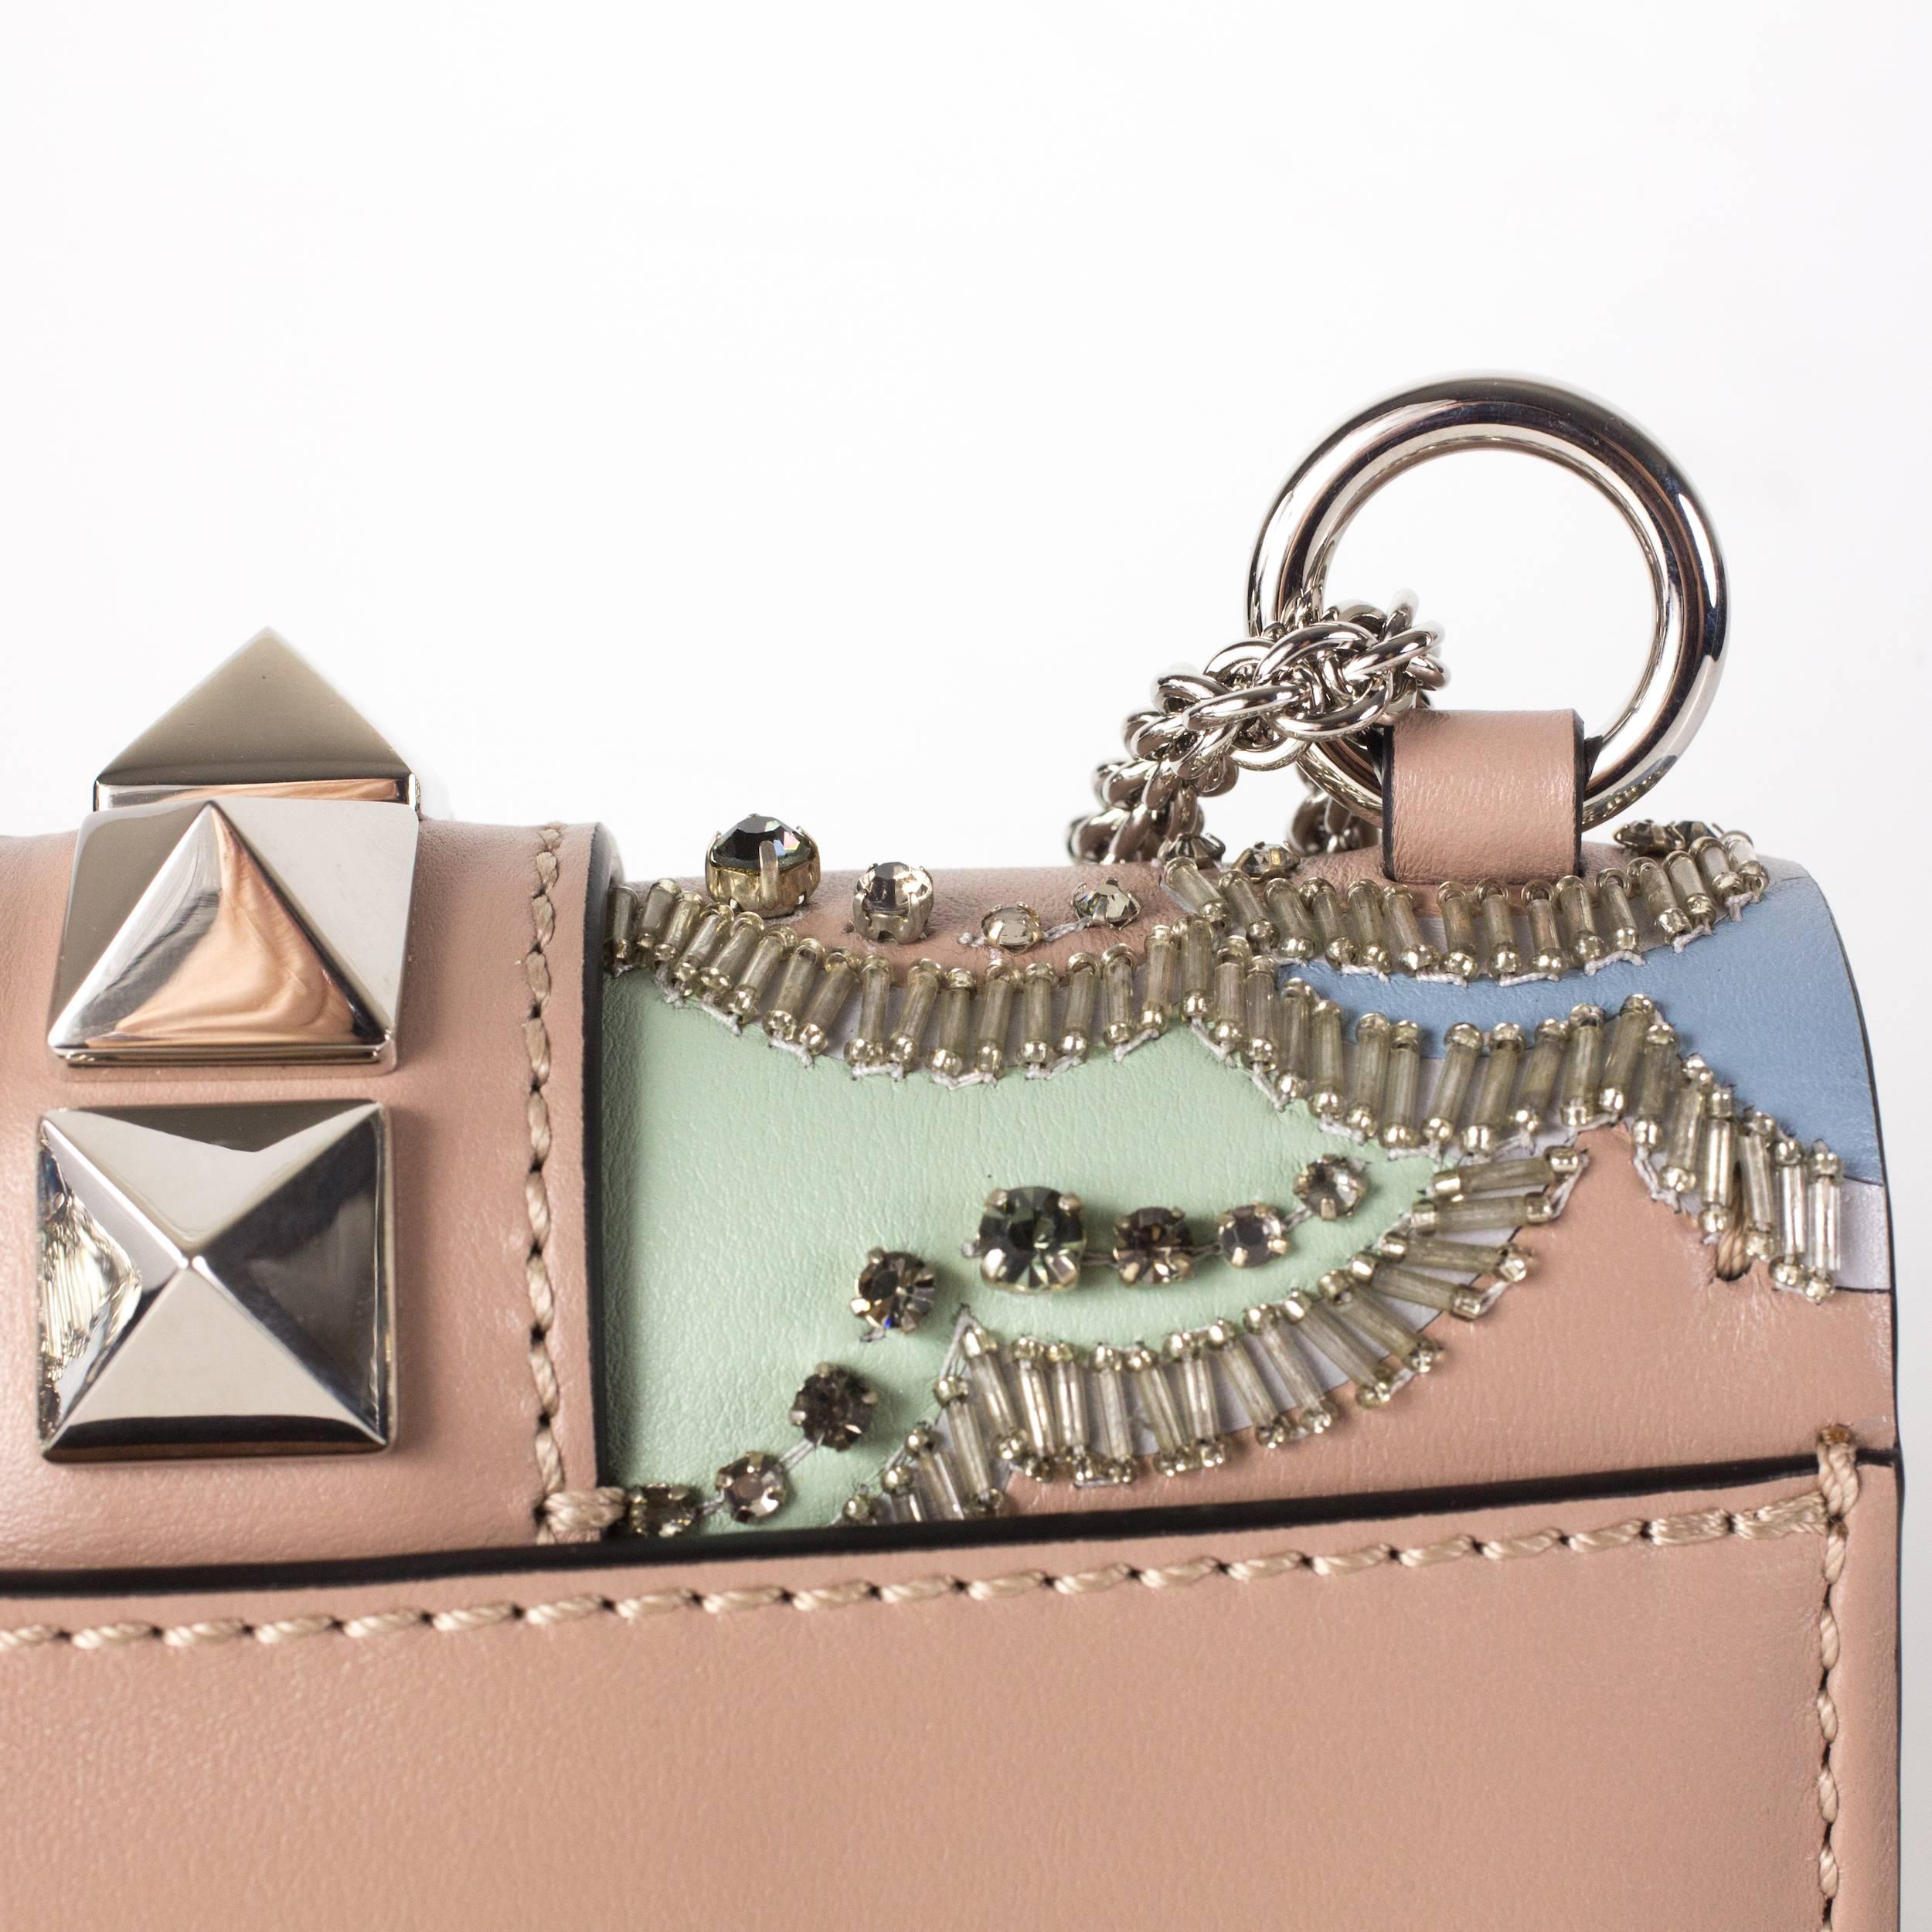 Valentino Bag - New - Pink Glam Lock Crystal Bead Rockstud Studded Handbag Bag 1